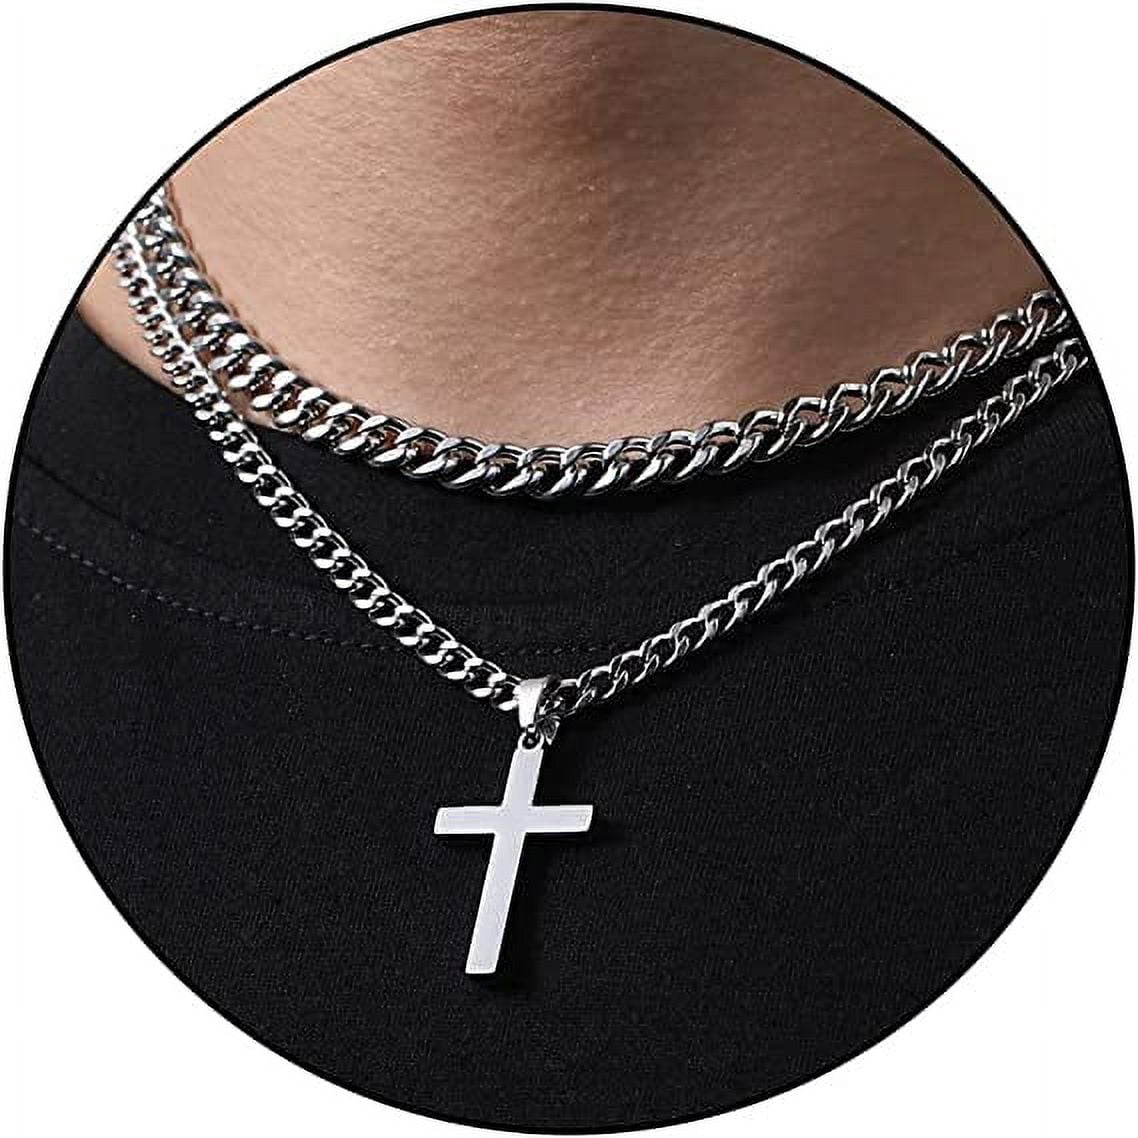 Men's Necklace - Men's Choker Necklace - Men's Leather Necklace - Men's Jewelry - Men's Gift - Boyfriend Gift - Husband Gift - Guys Jewelry